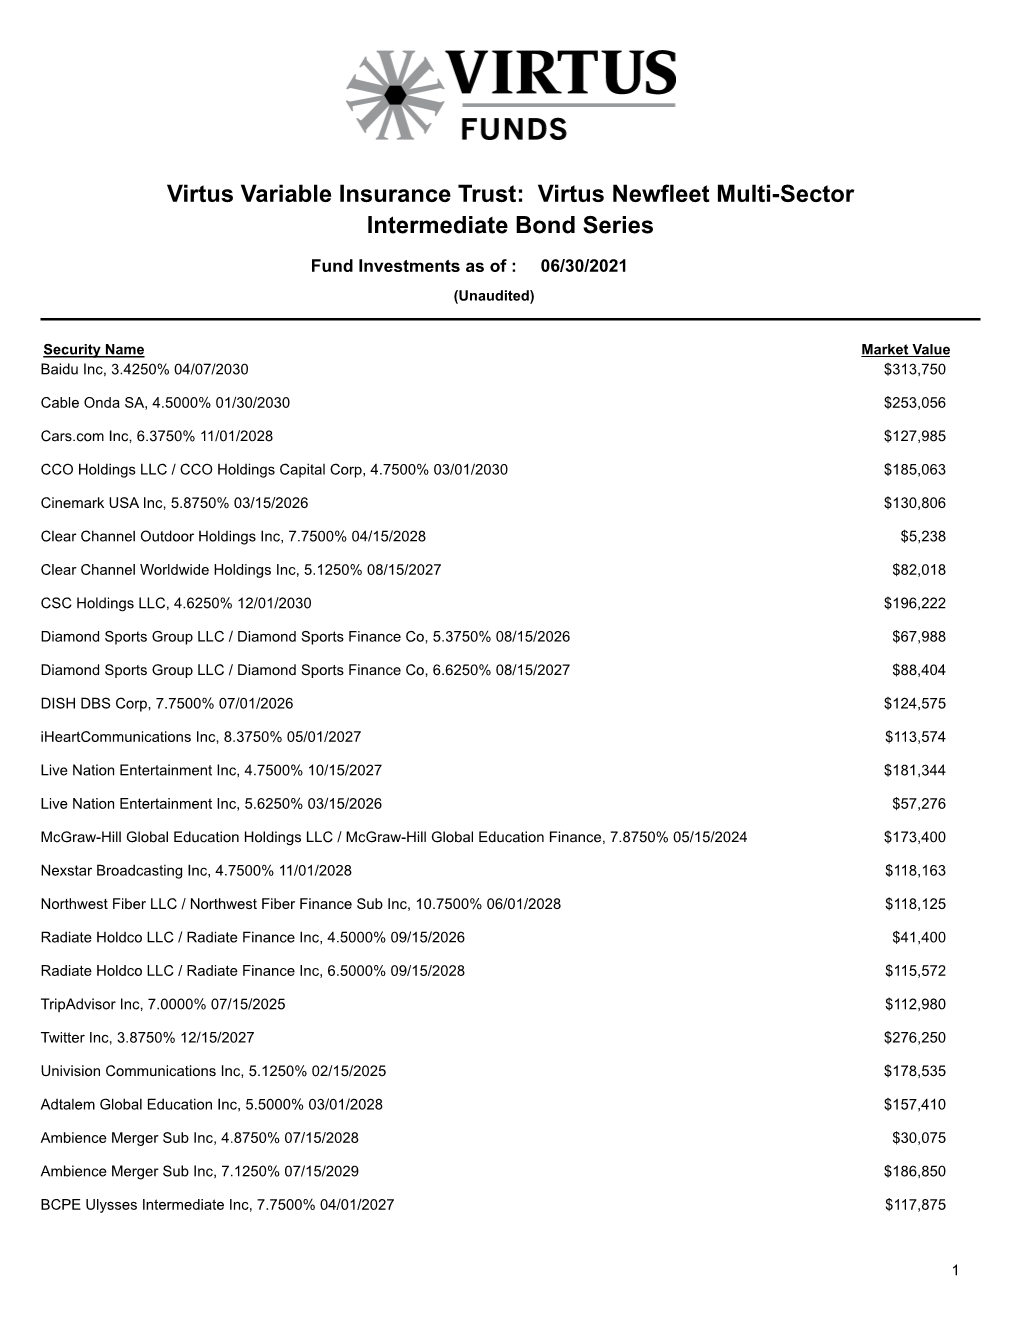 Virtus Newfleet Multi-Sector Intermediate Bond Series